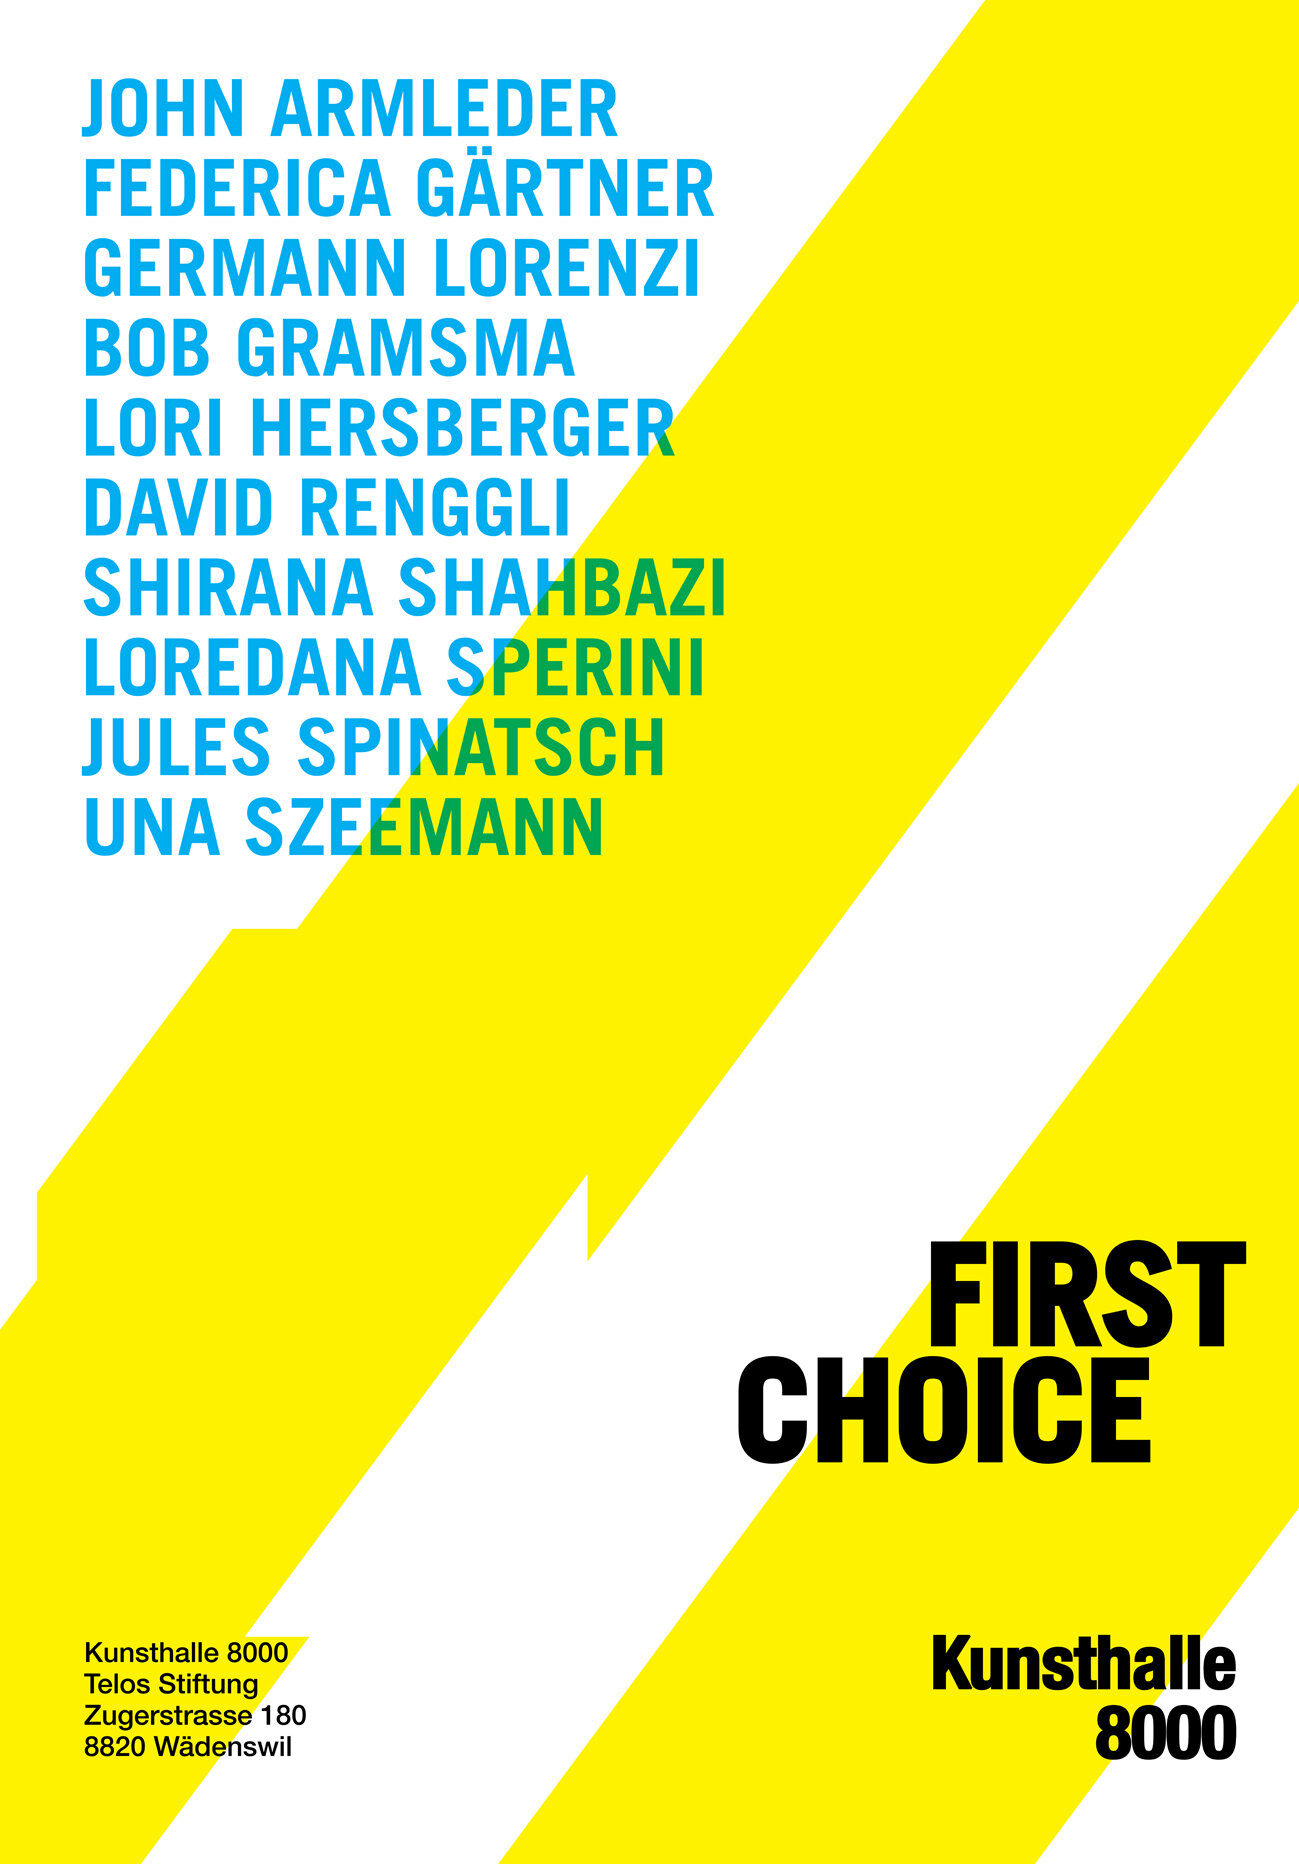 first-choice-21-september-25-oktober-2020-kunsthalle-8000